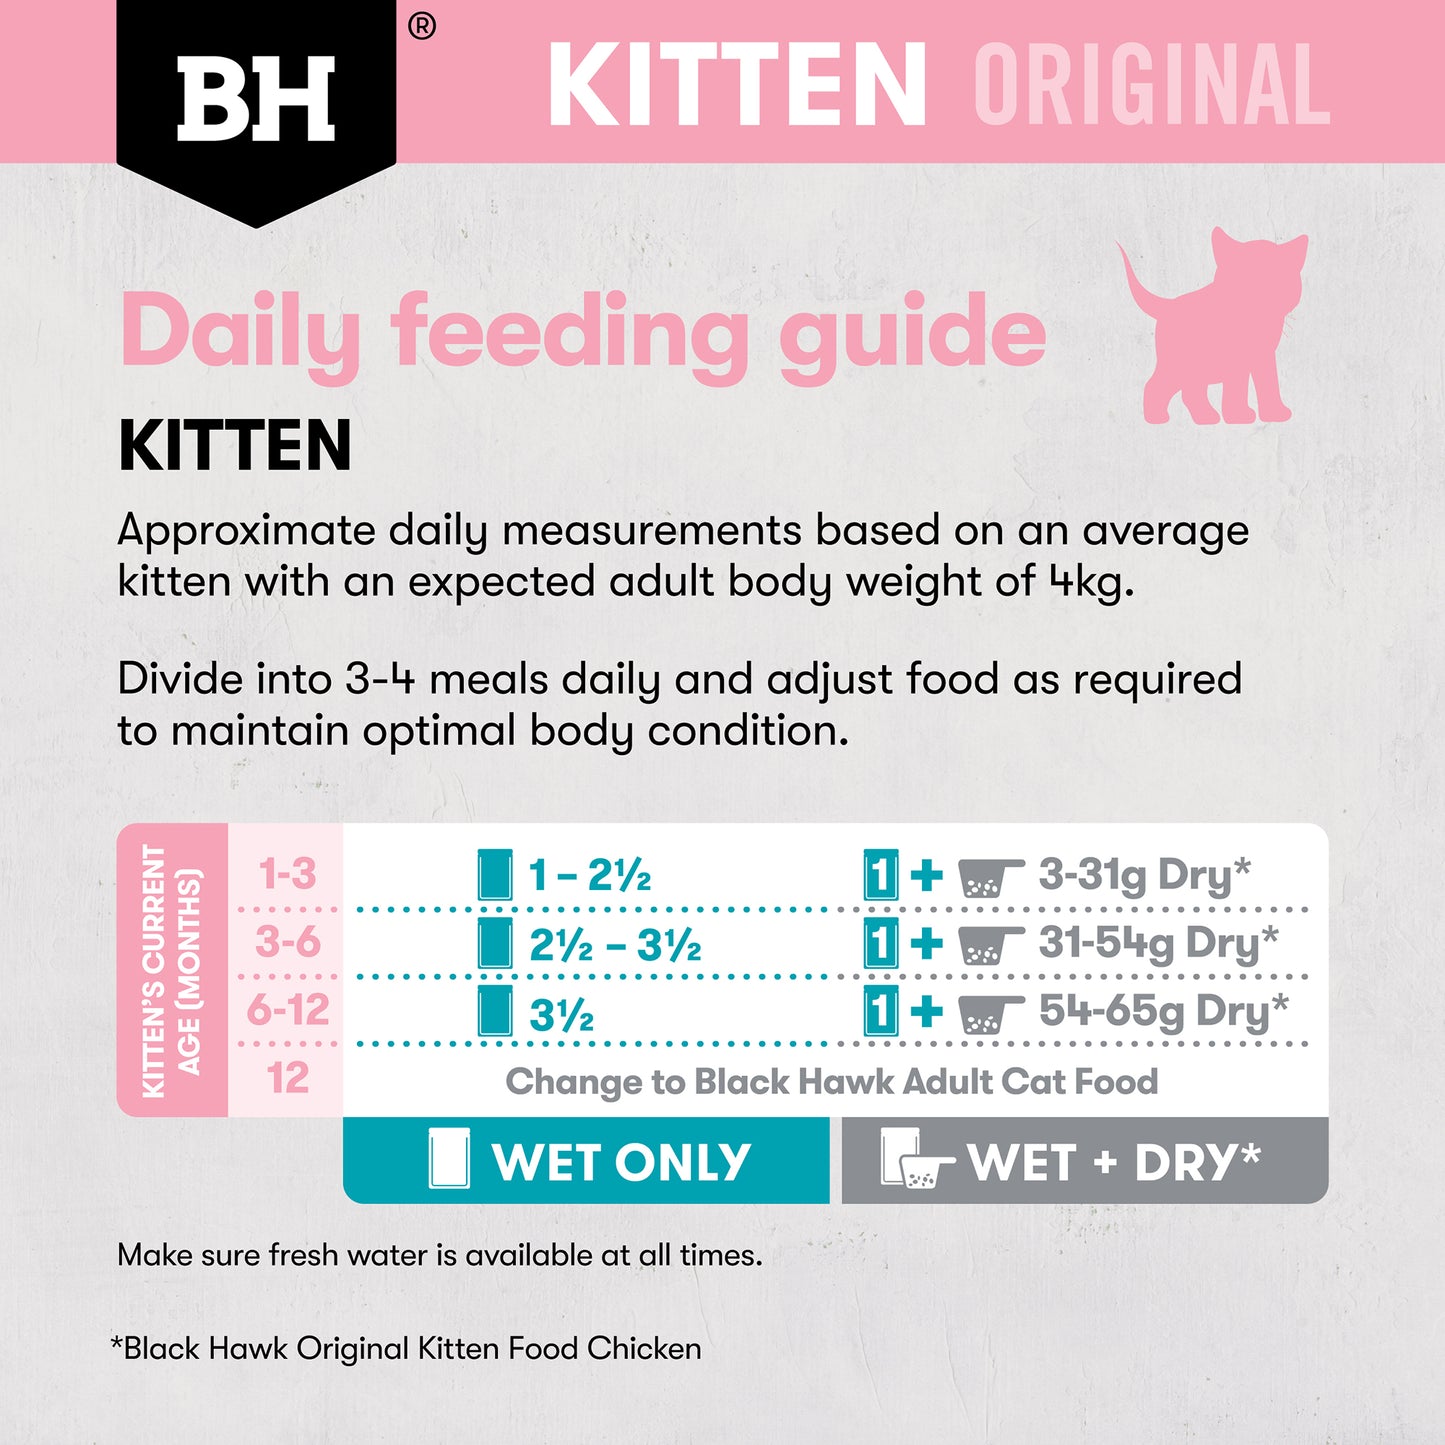 Black Hawk Ocean Fish Kitten Gravy Wet Cat Food 85G